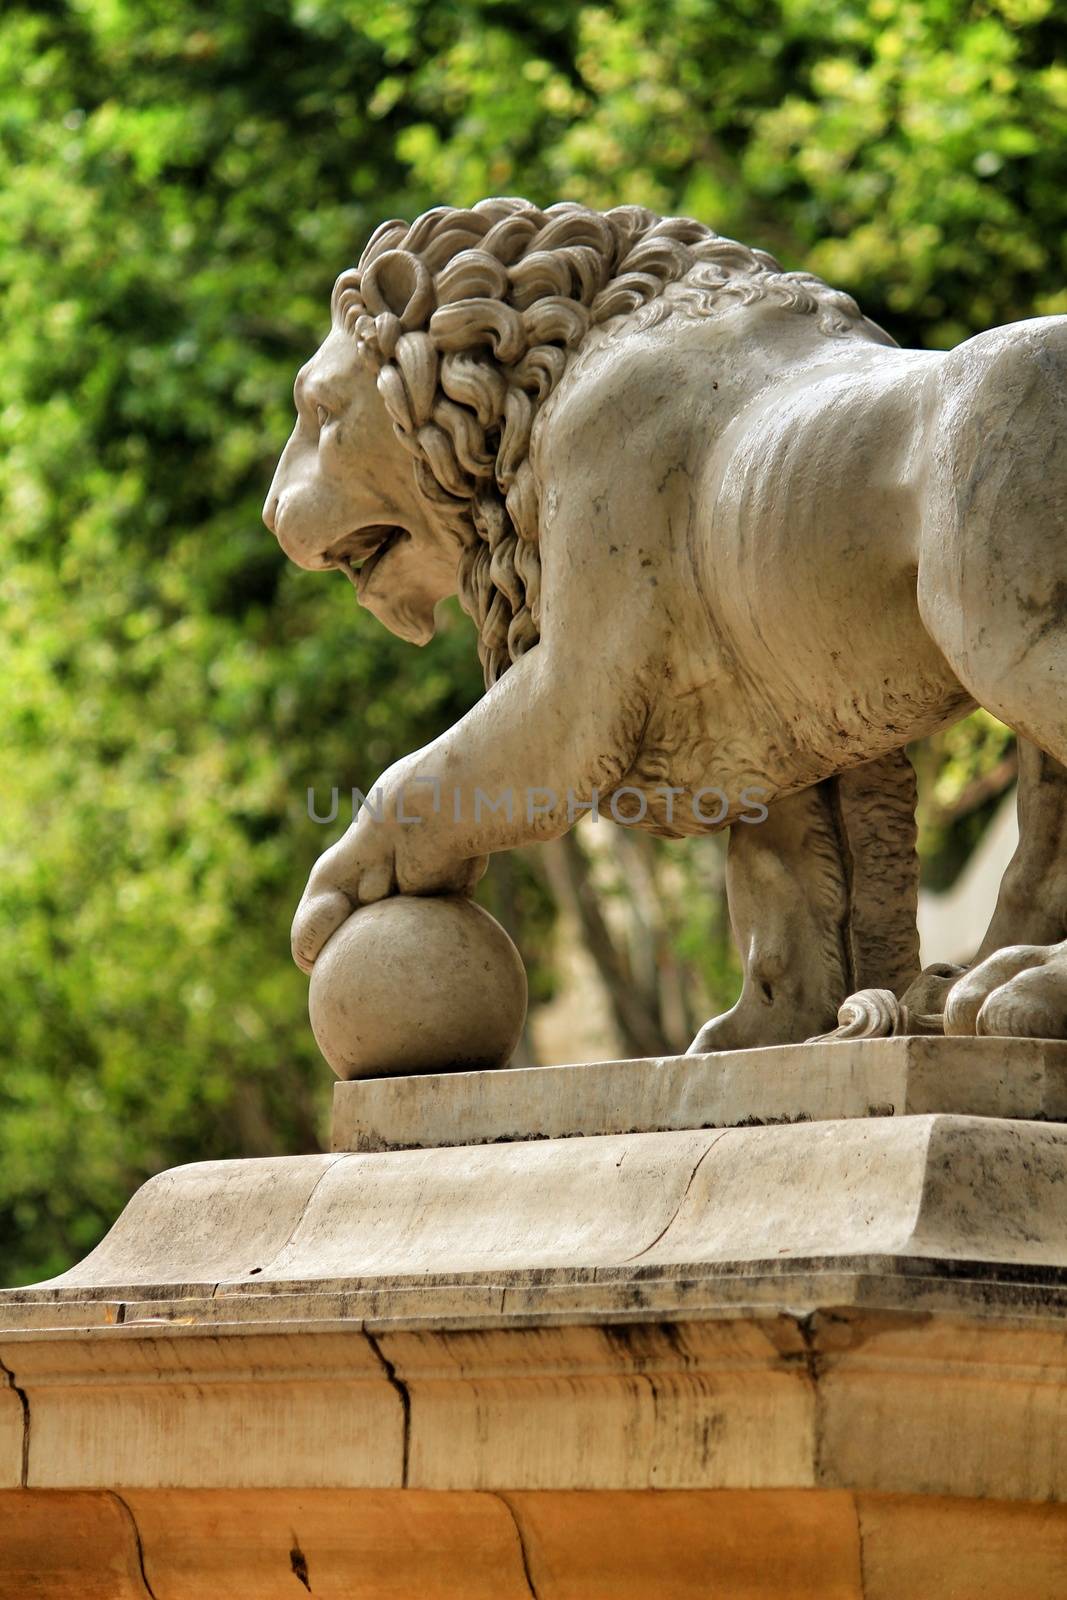 Lion sculpture at the end of Explanada promenade in Alicante, Spain